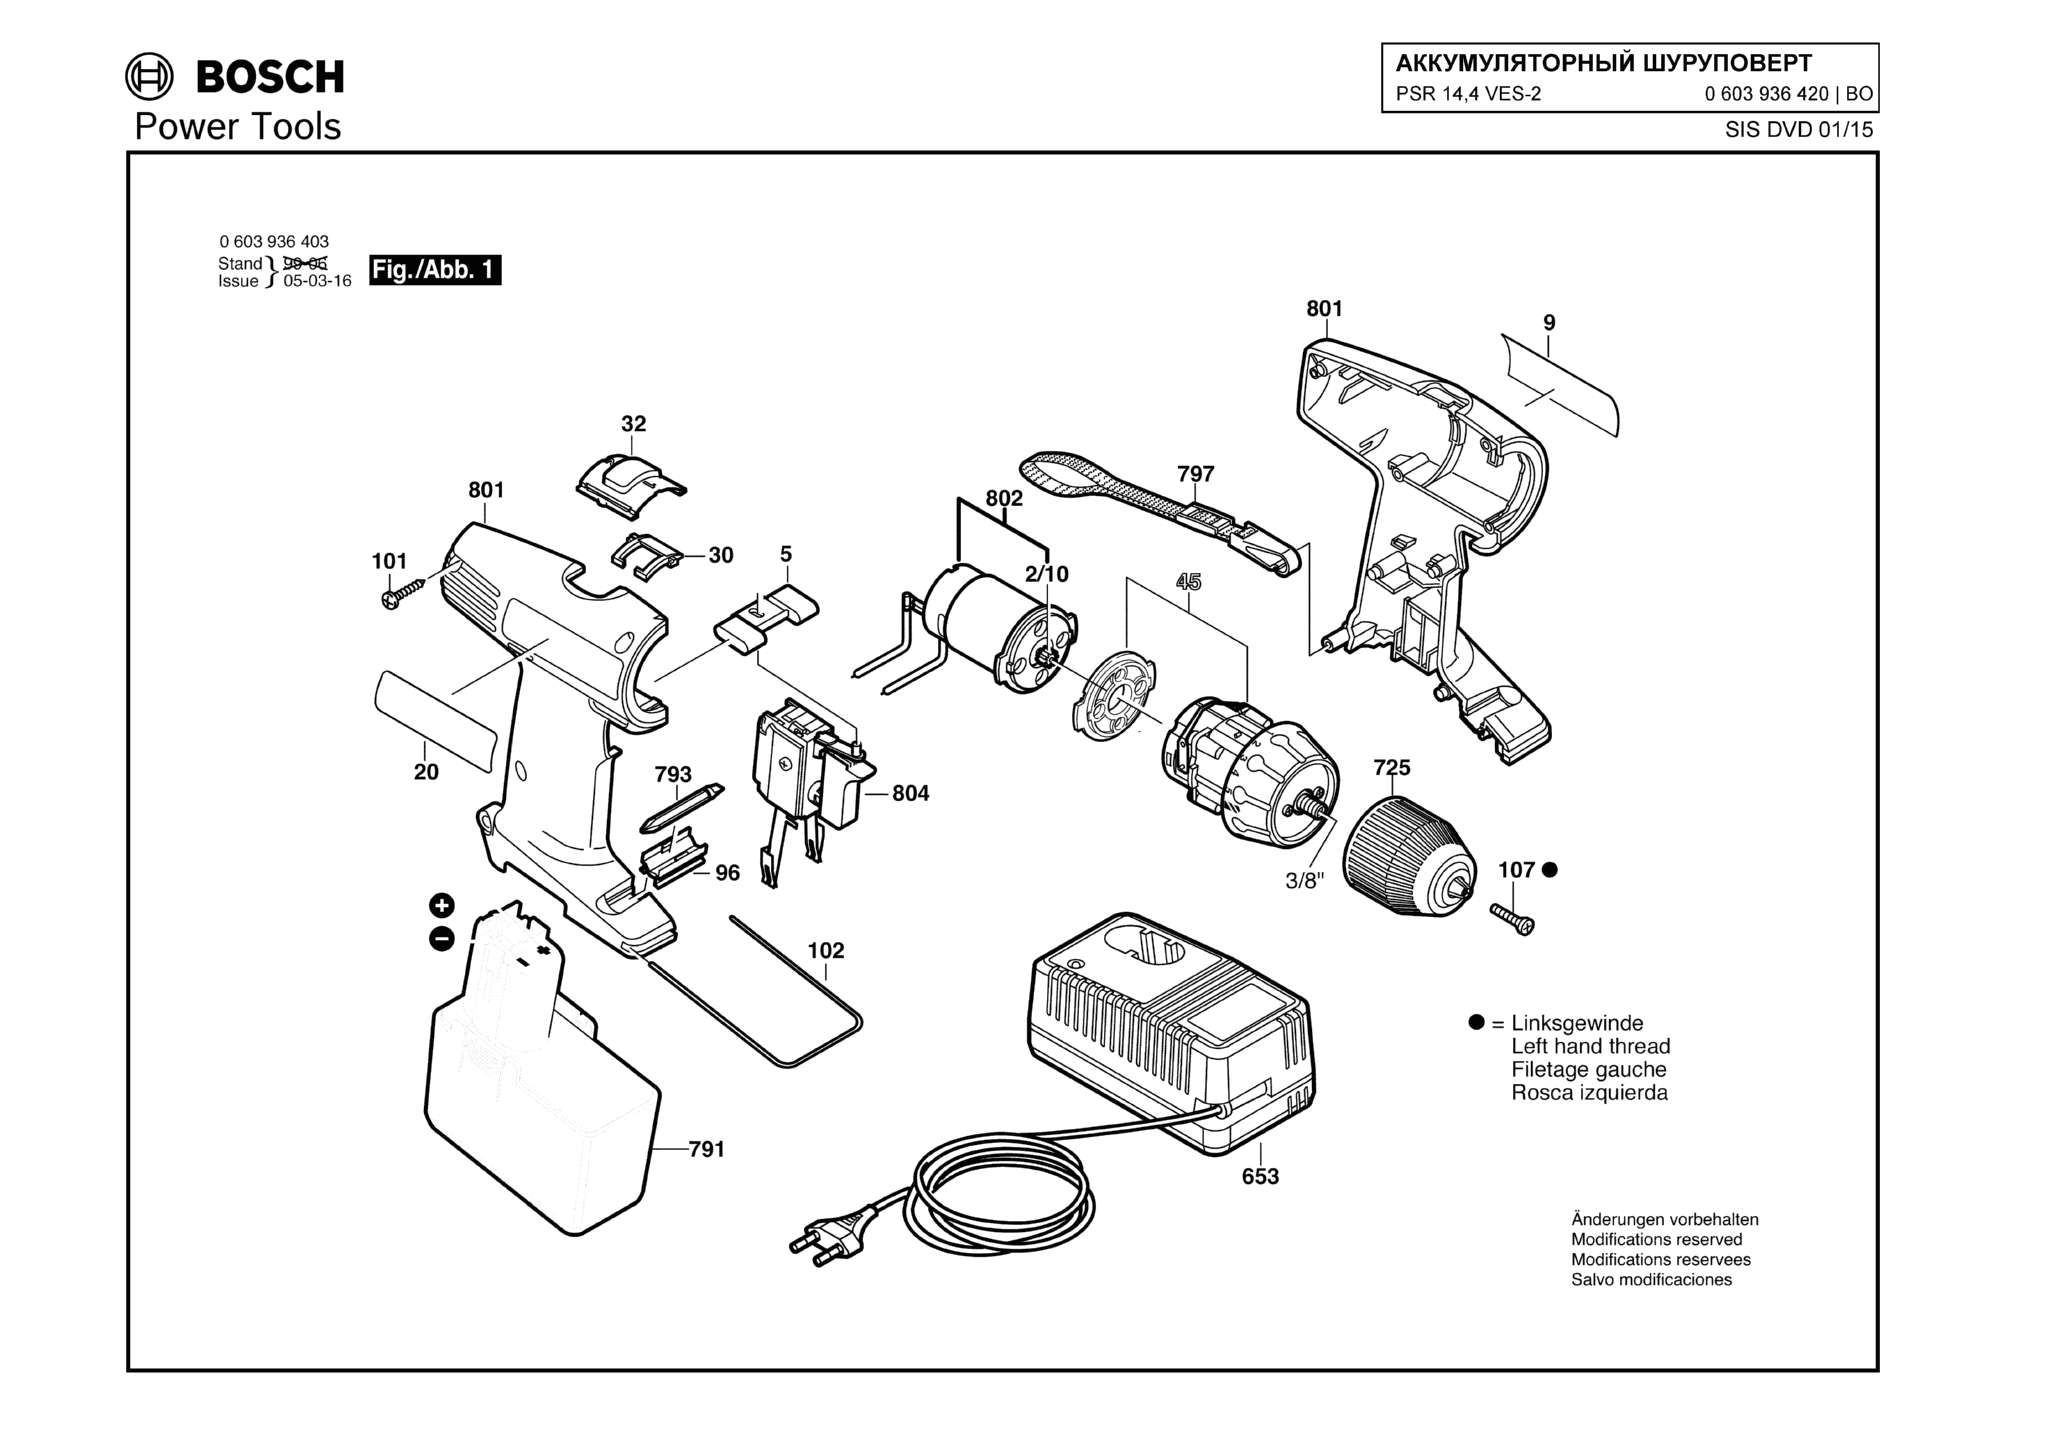 Запчасти, схема и деталировка Bosch PSR 14,4 VES-2 (ТИП 0603936420)